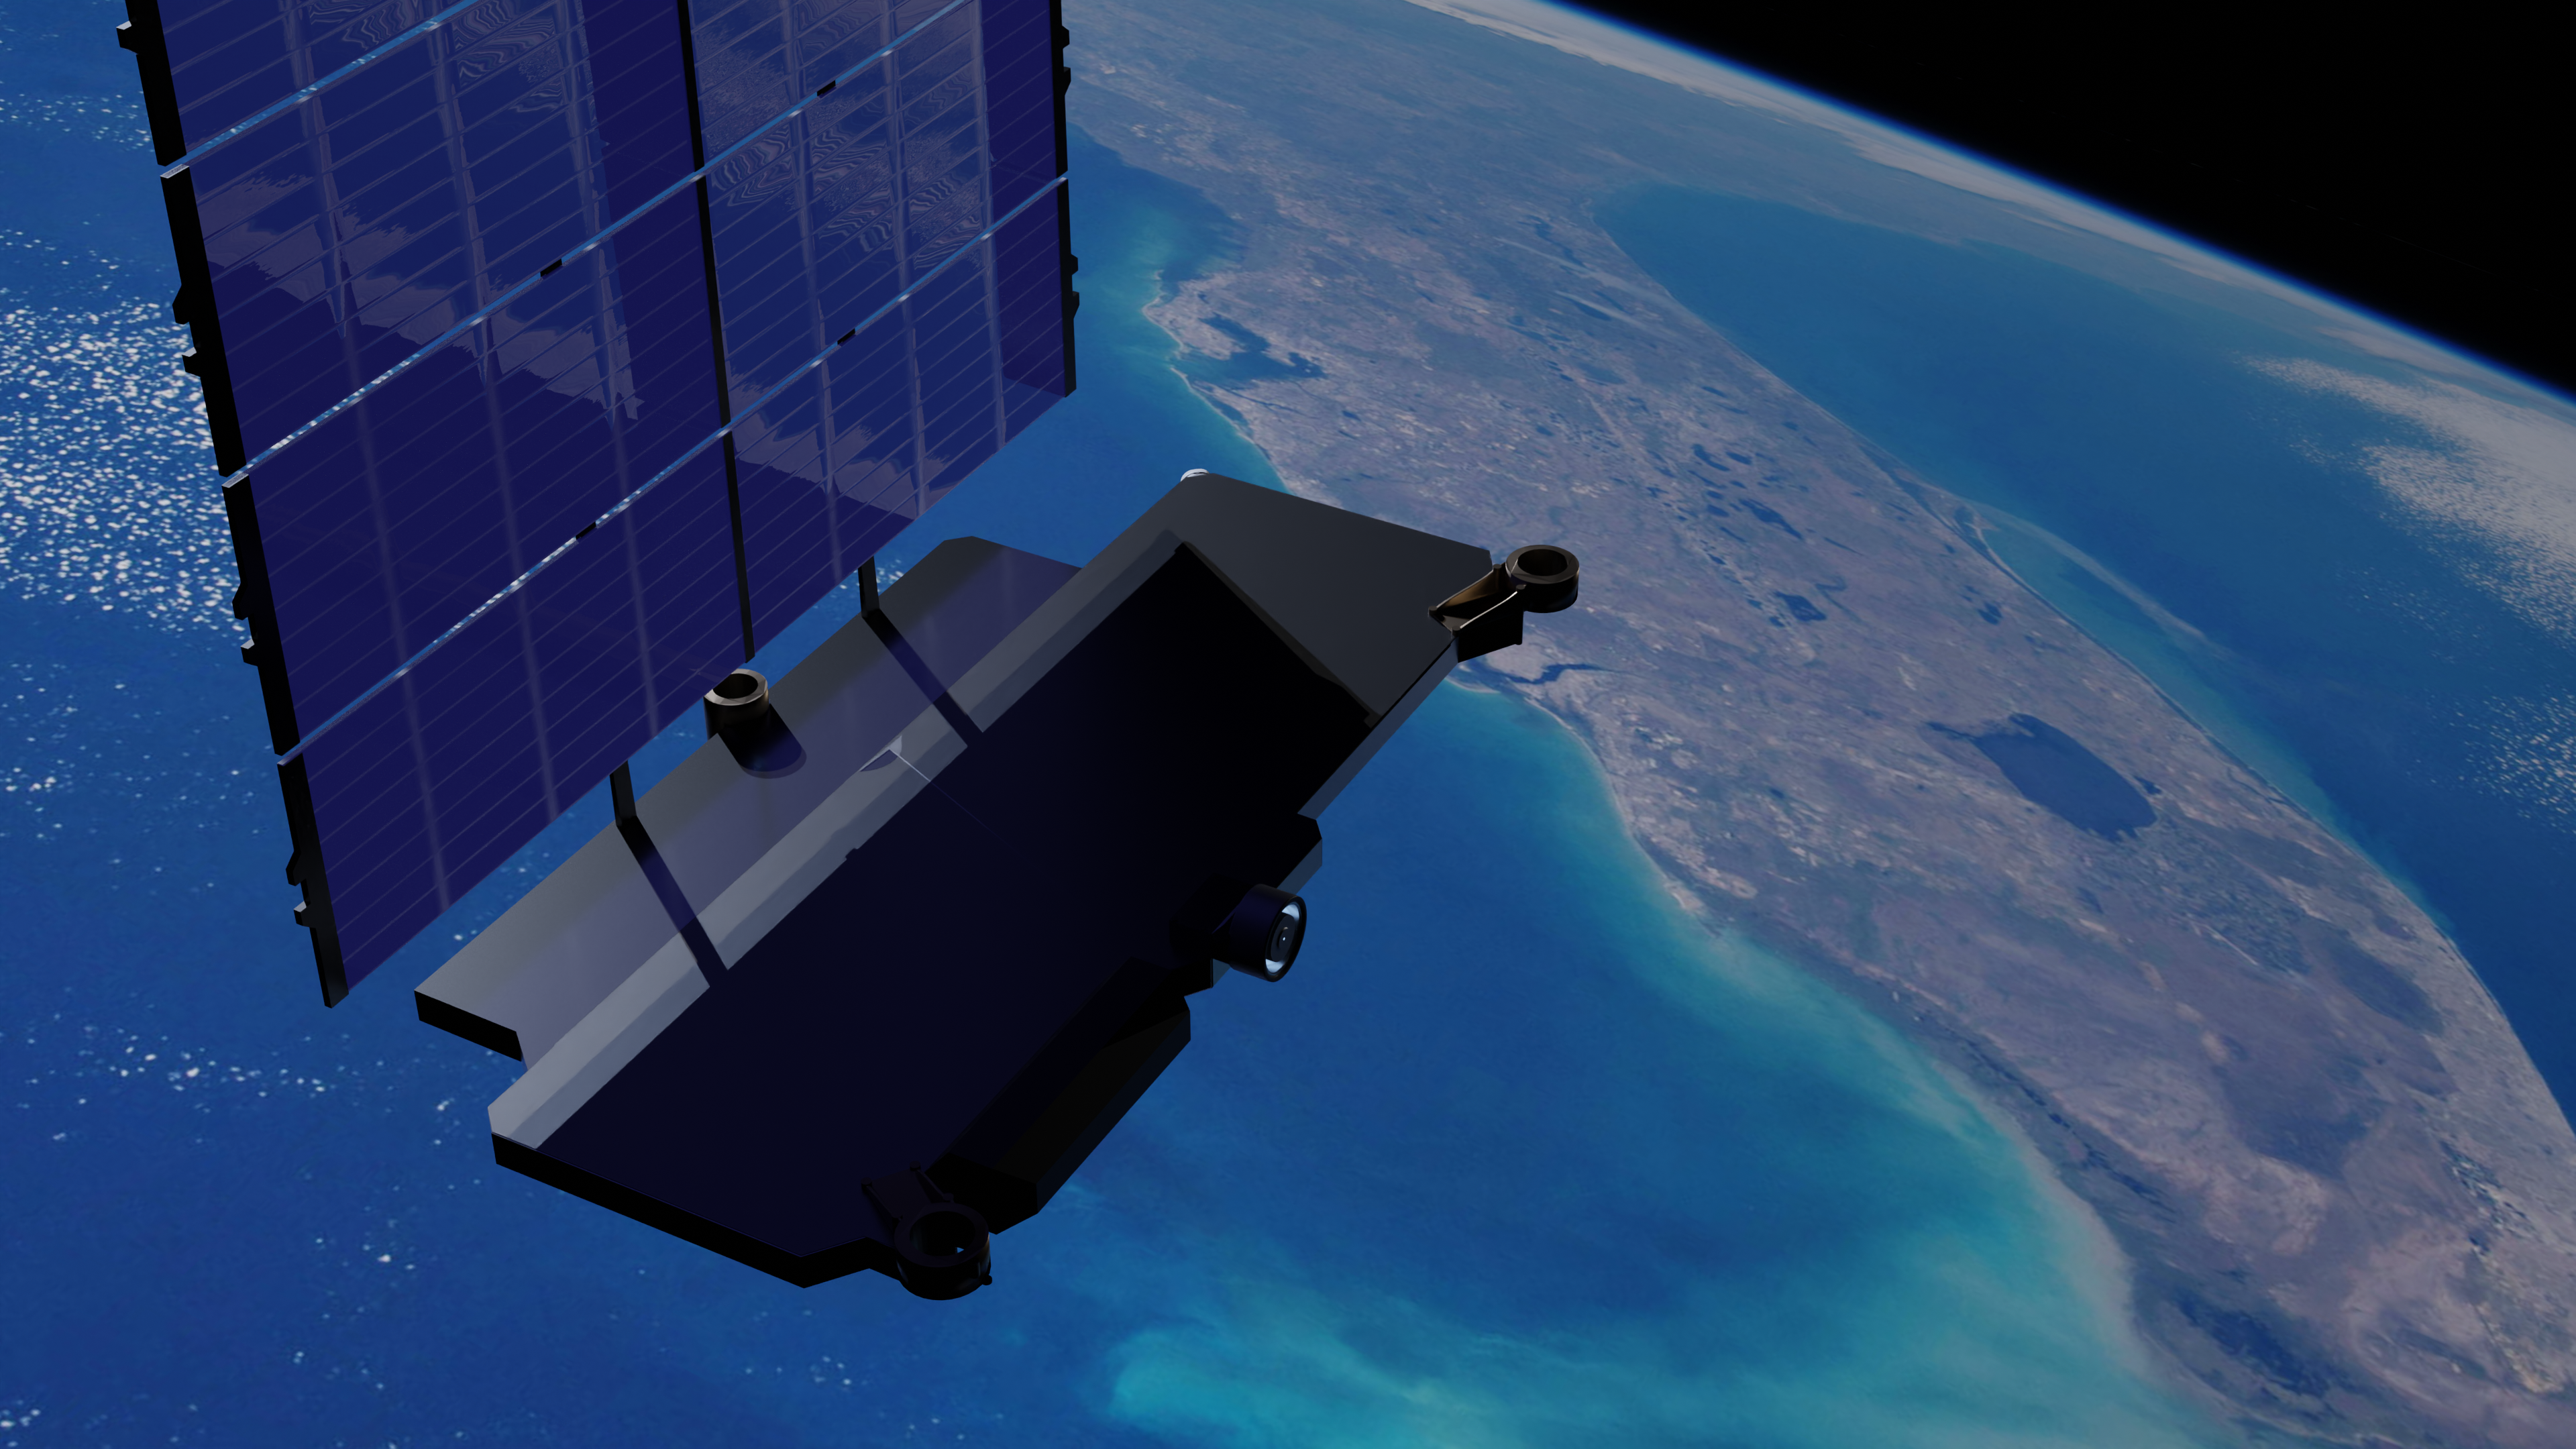 SpaceX targets to deploy the next fleet of Starlink satellites this week